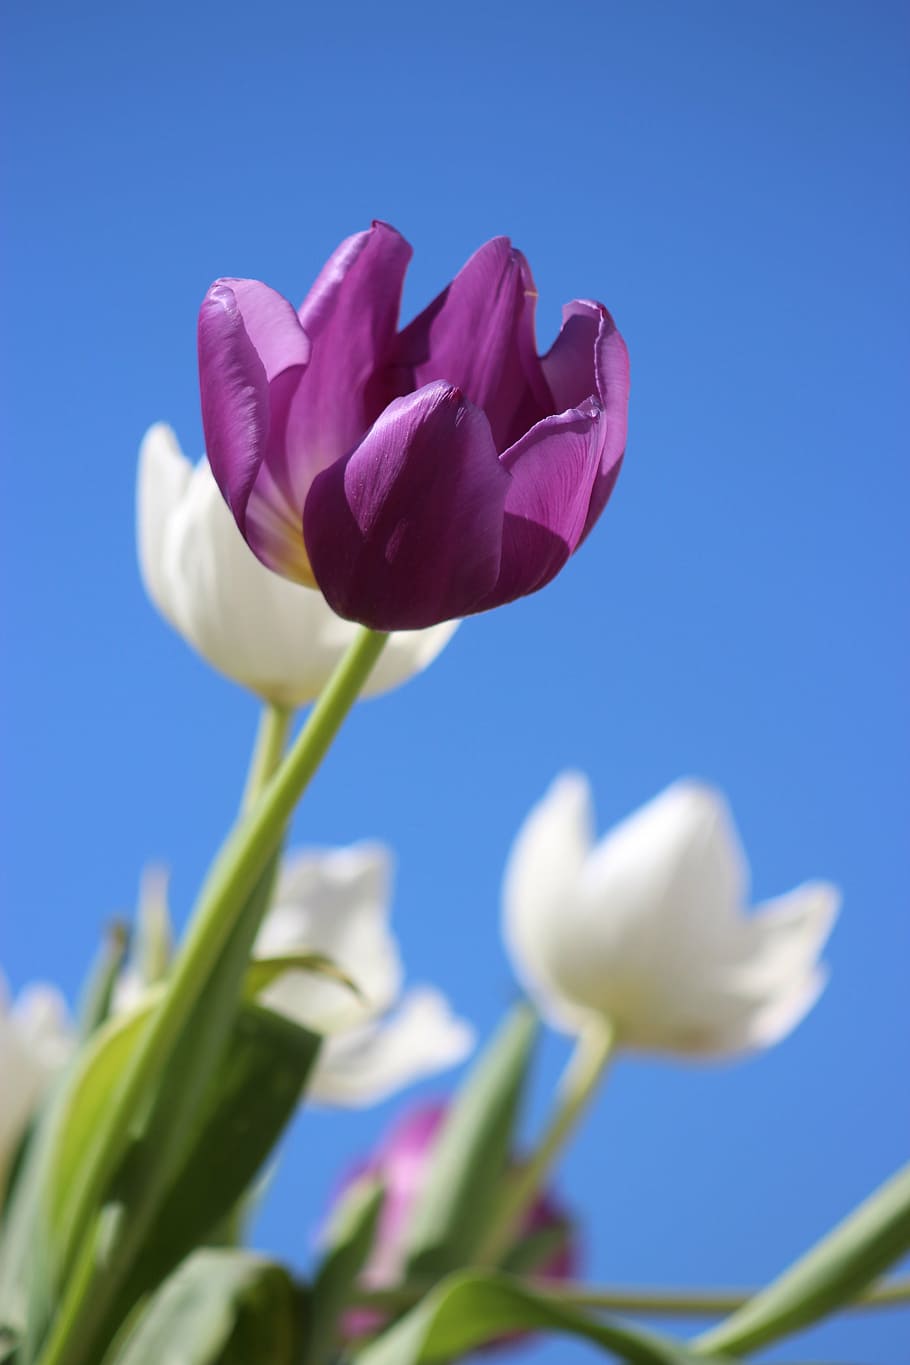 selektif, fotografi fokus, ungu, putih, bunga tulip, tulip, bunga, abadi, holland, musim semi